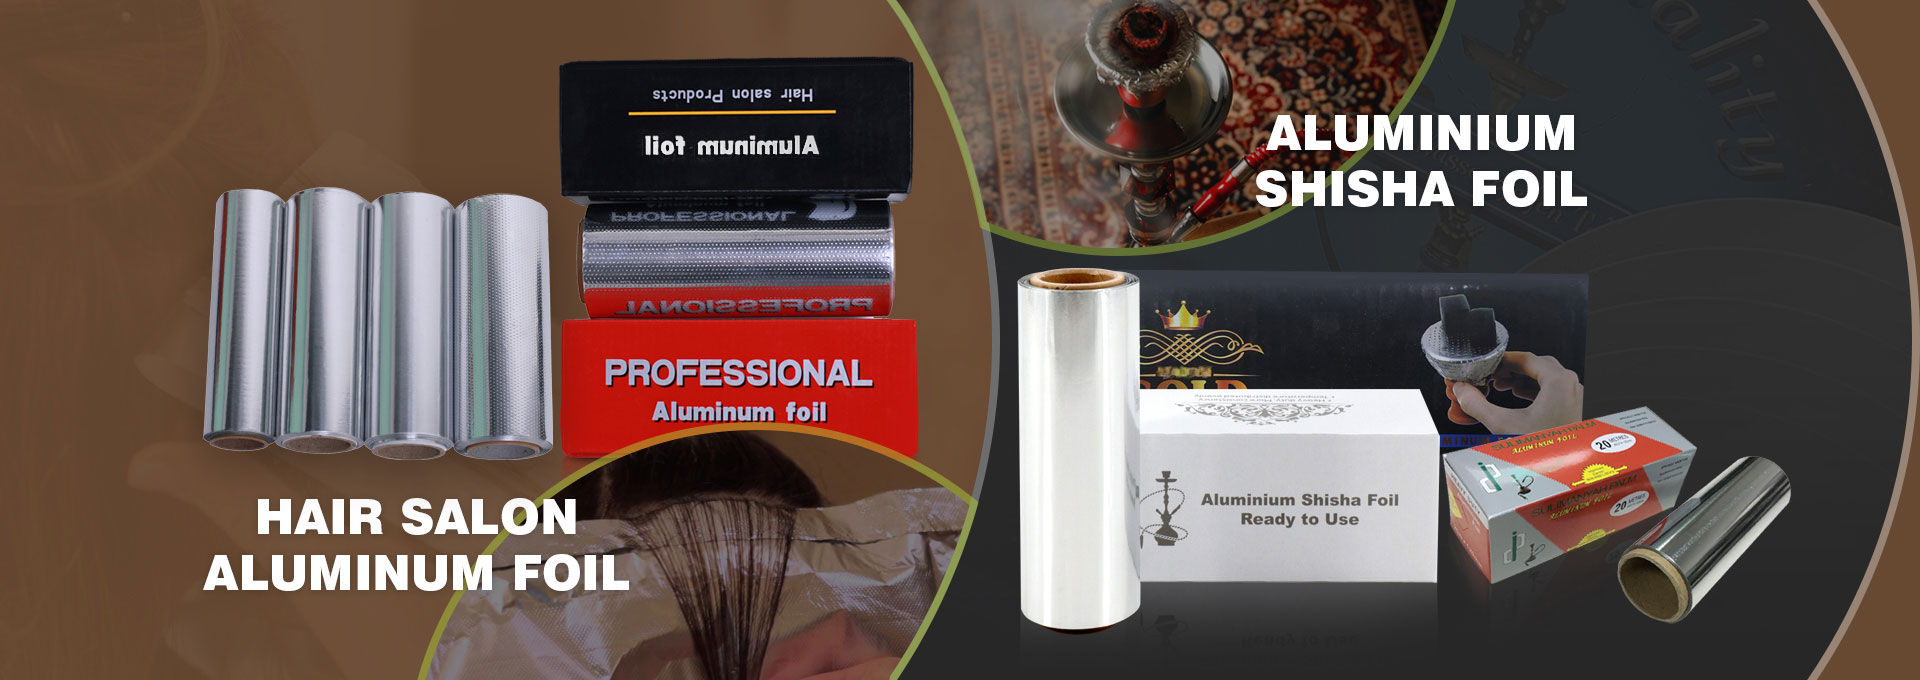 Aluminum Hairdressing Foil and Shisha Foil